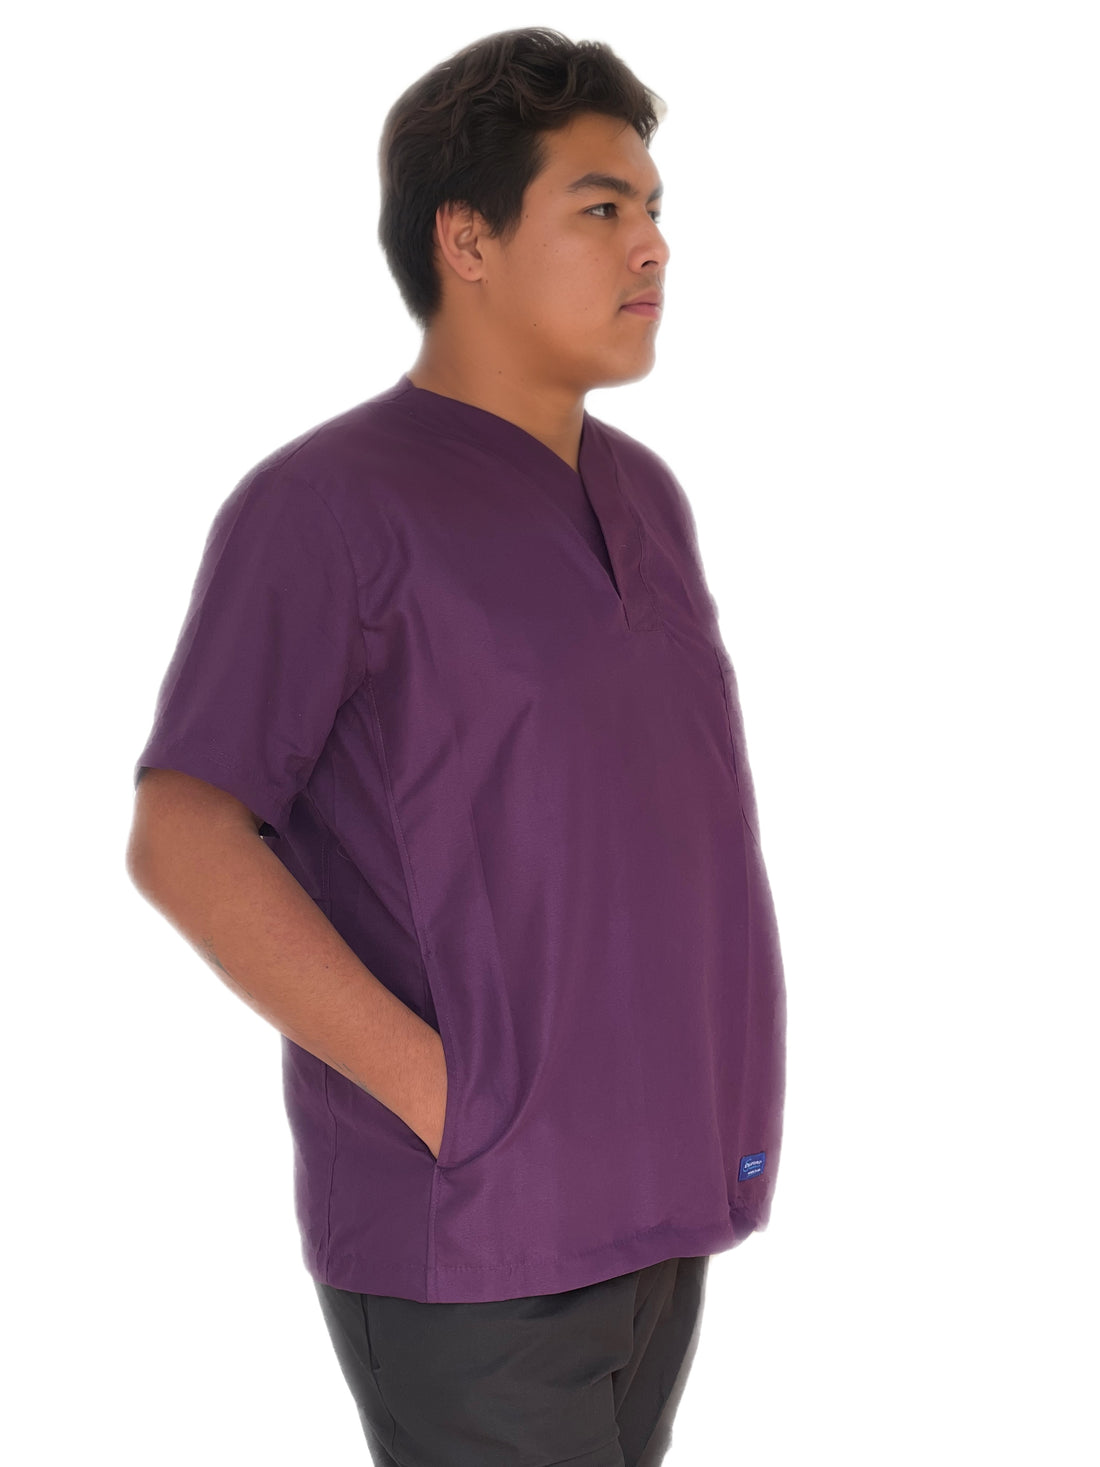 filipina para hombre uniformes stanford, quirurgico comprar en mexico